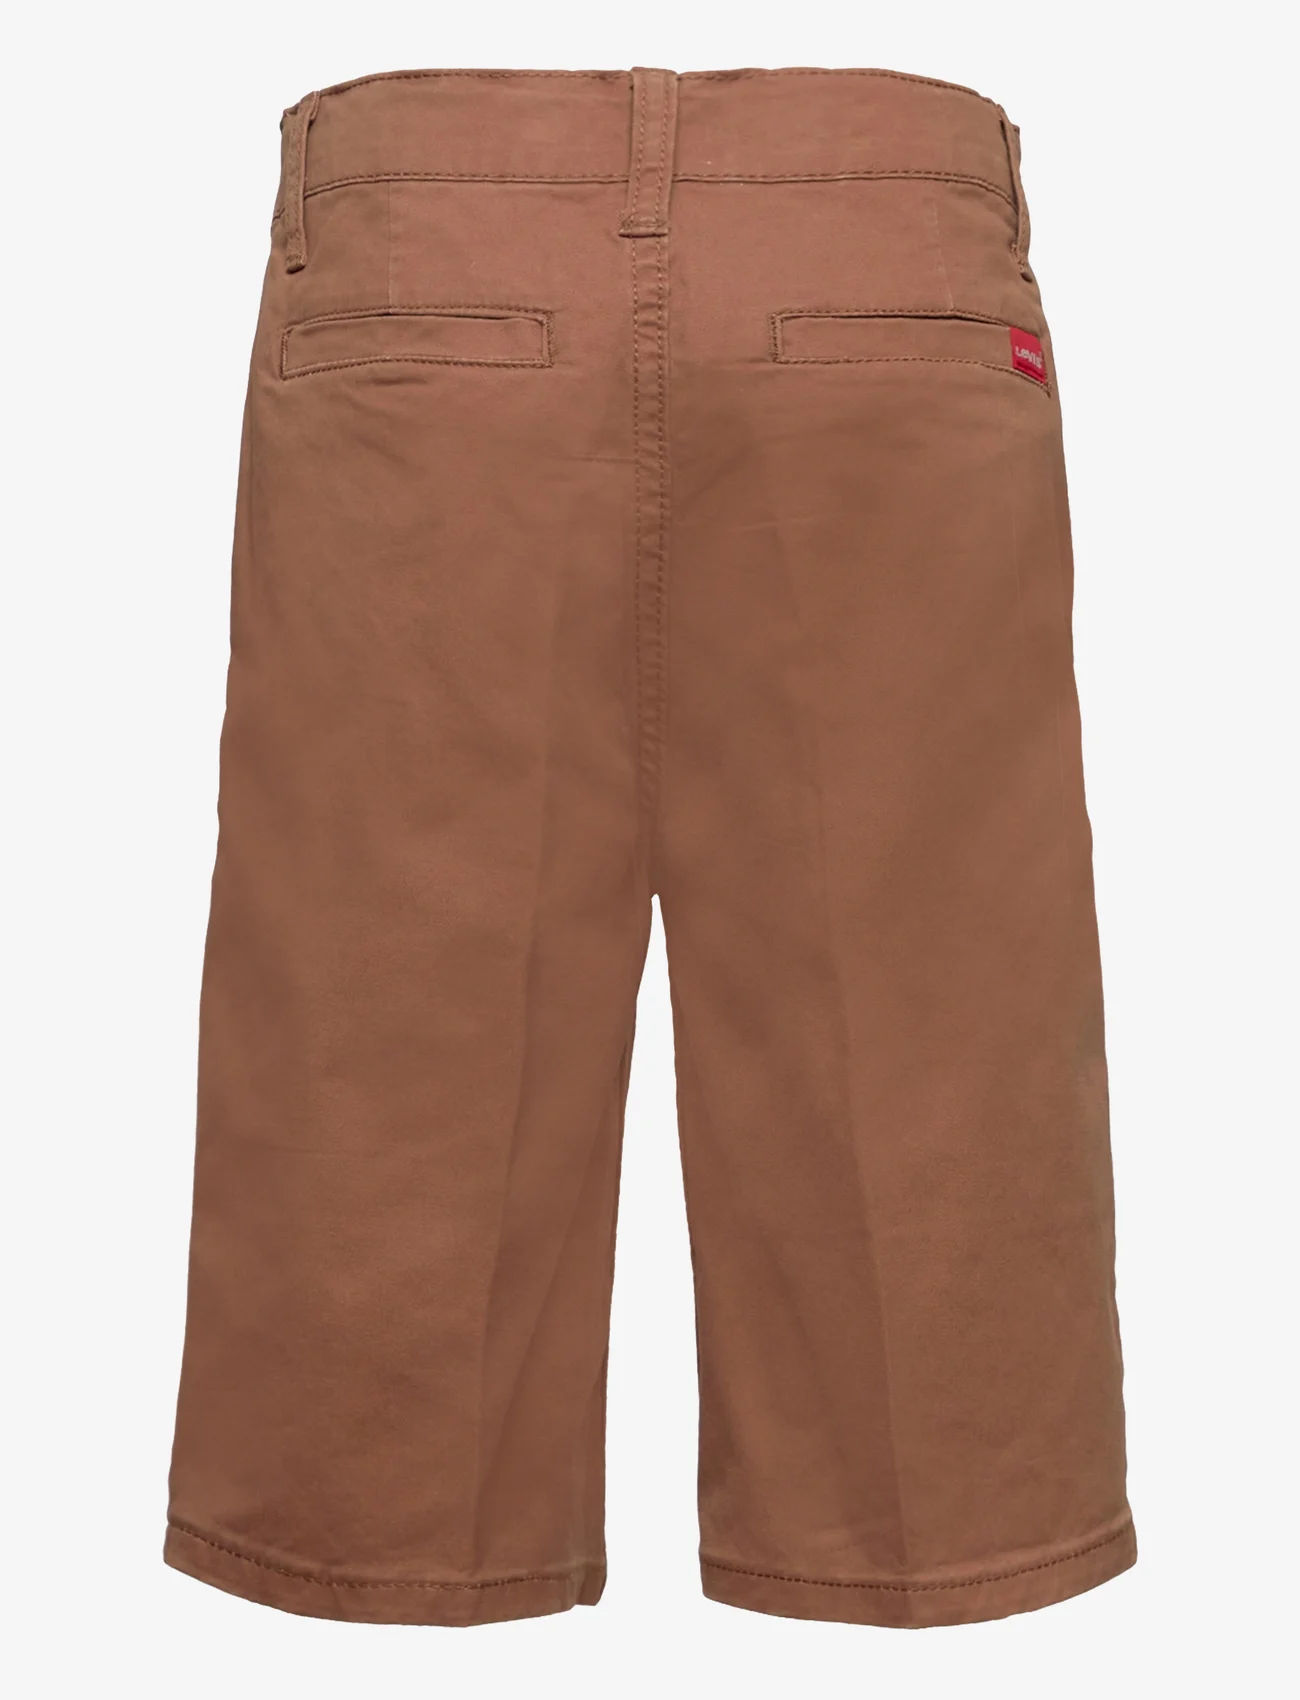 Levi's - Levi's Bermuda Shorts - chino shorts - brown - 1